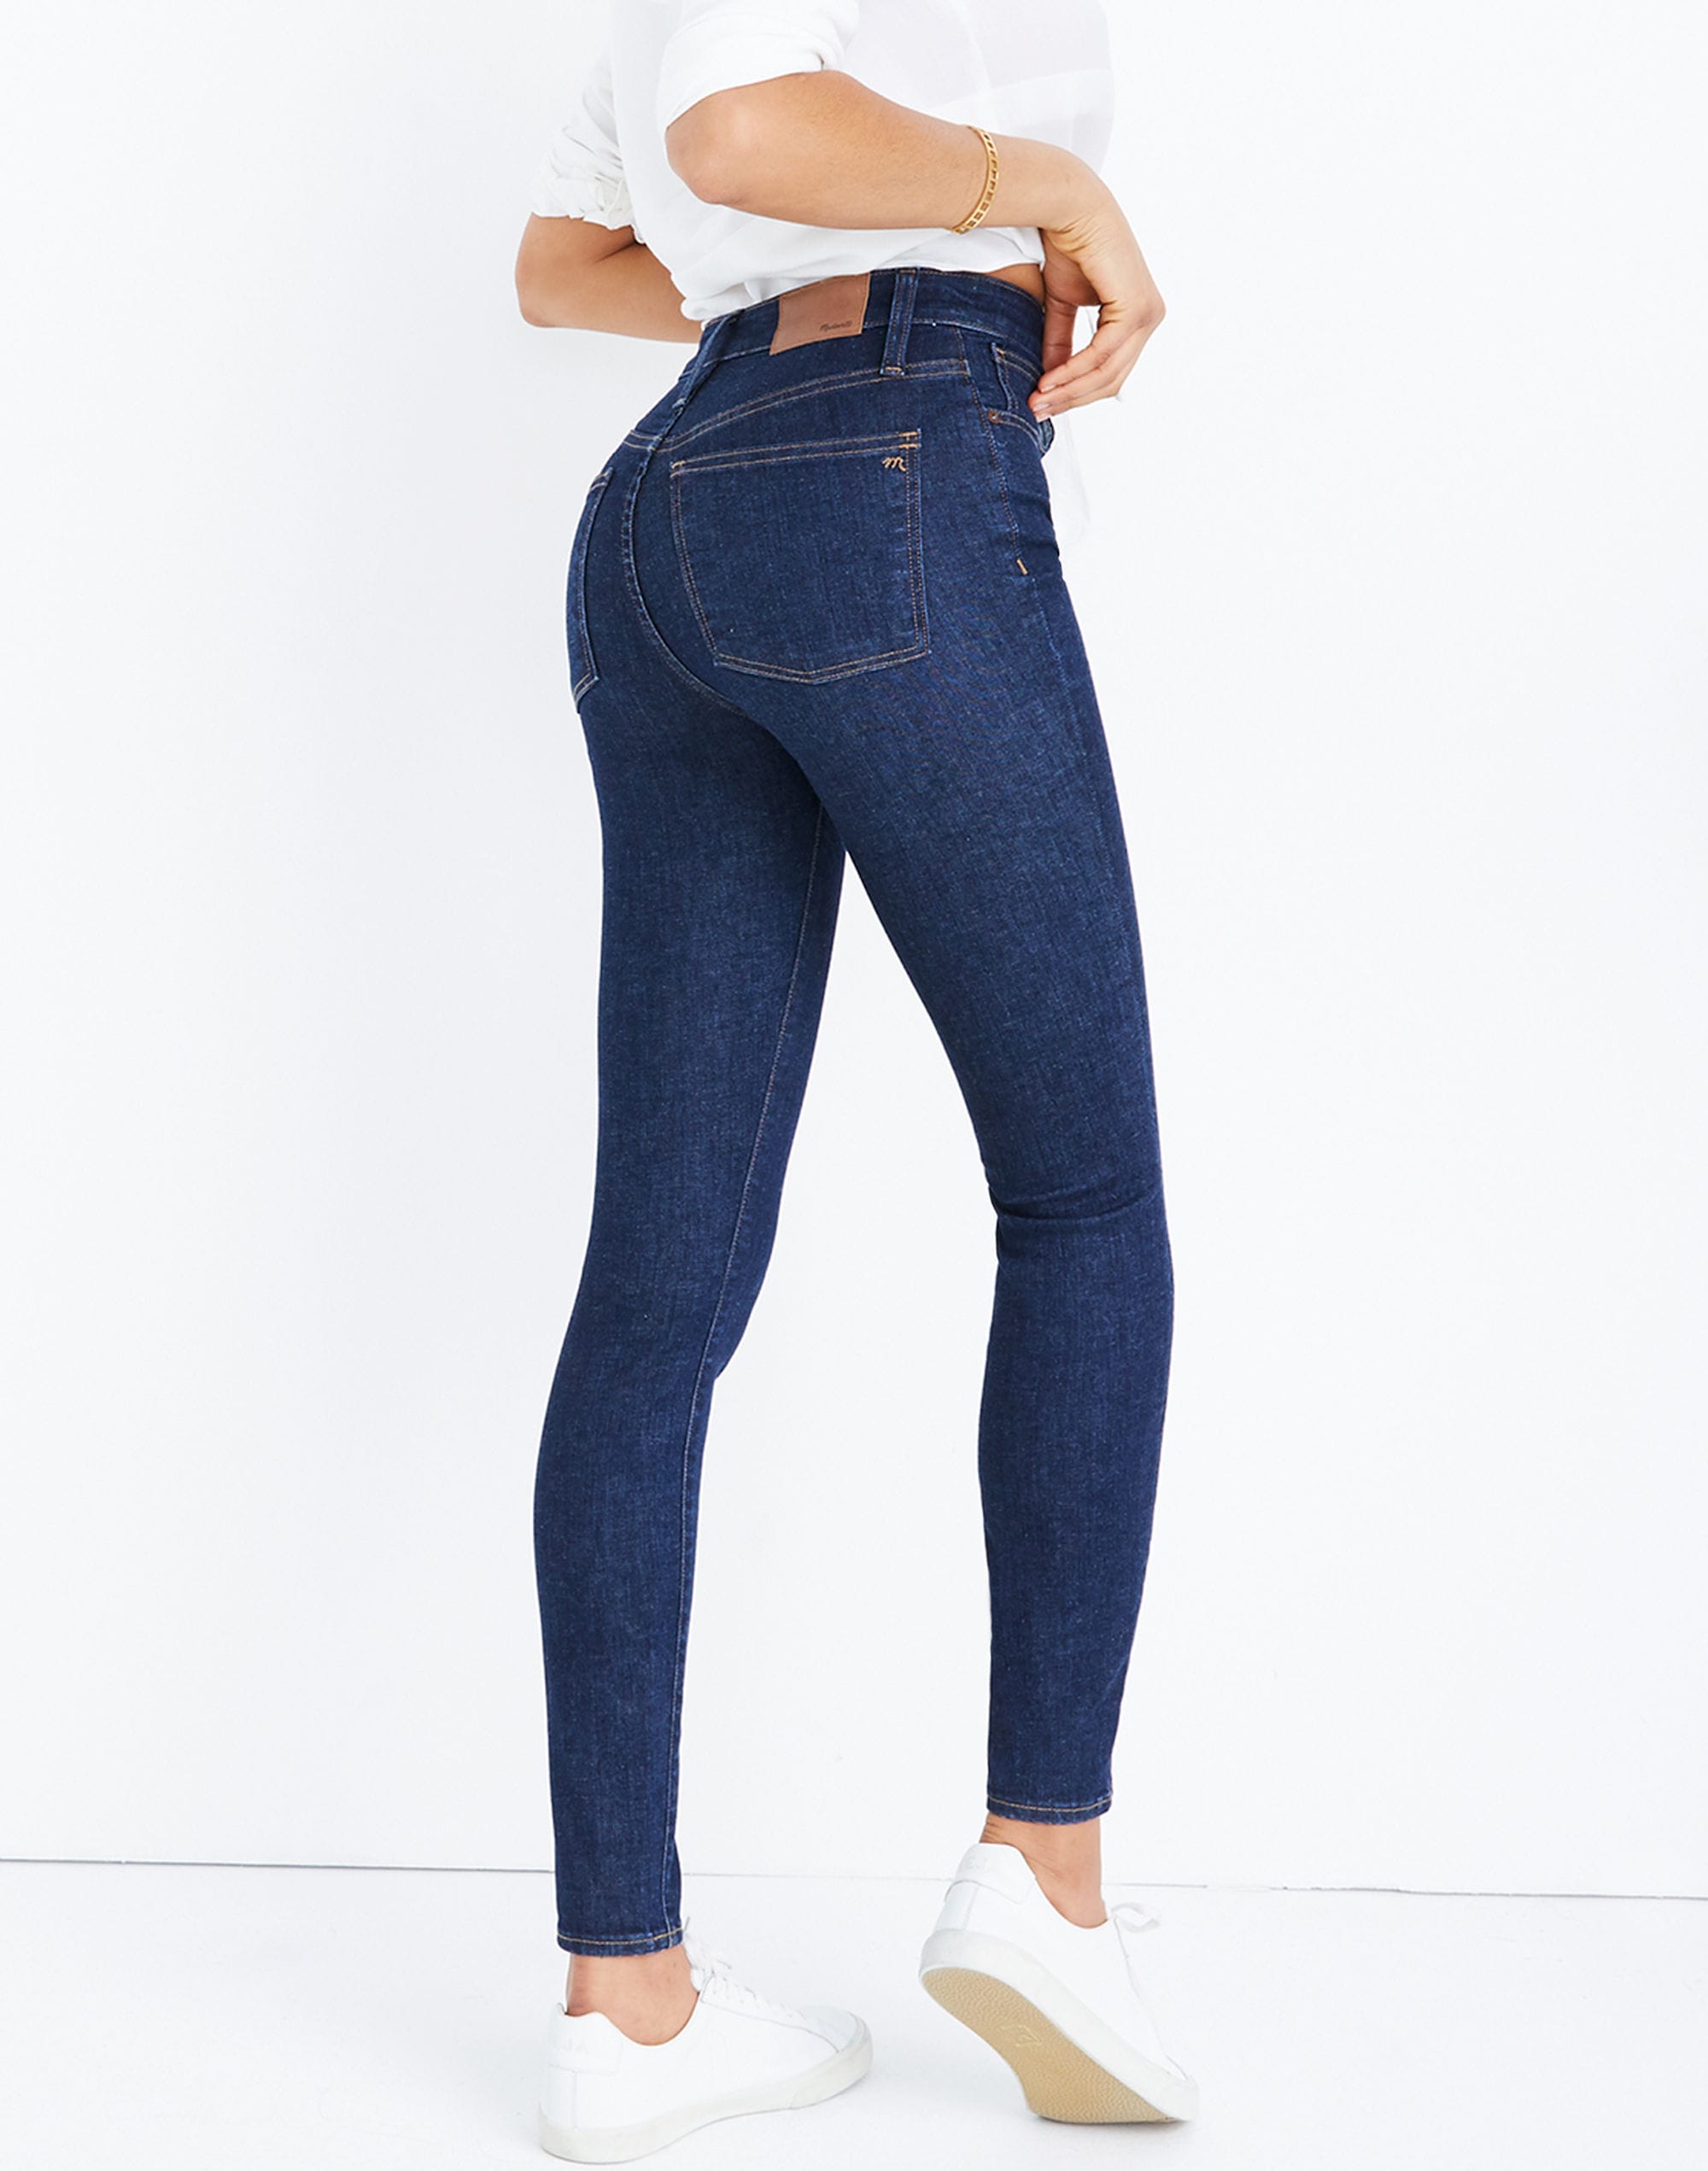 Tall Women's Skinny Jeans